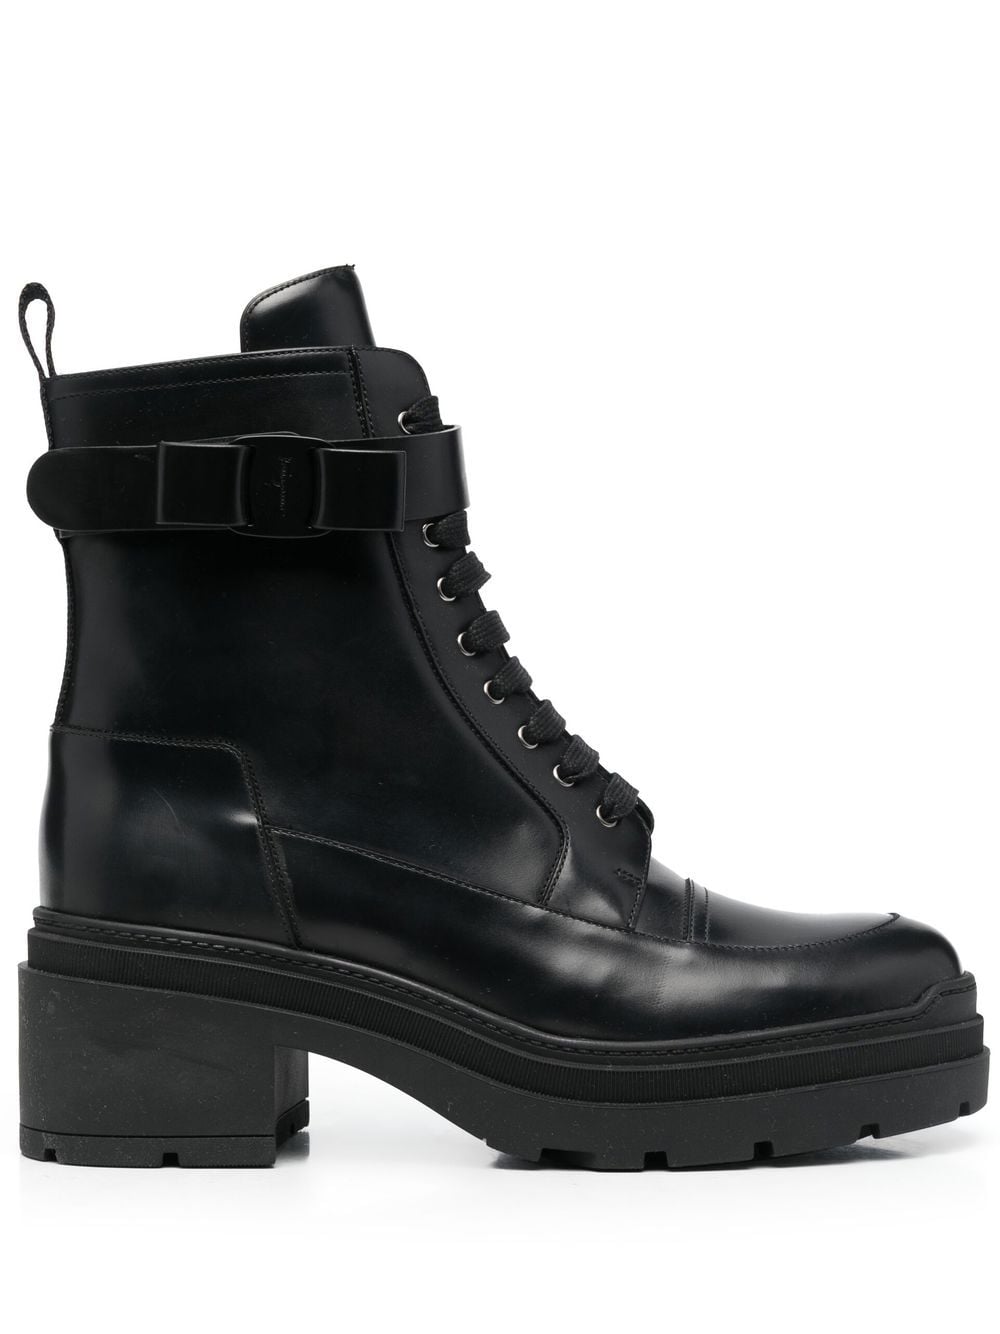 Ferragamo chunky leather biker boots - Black